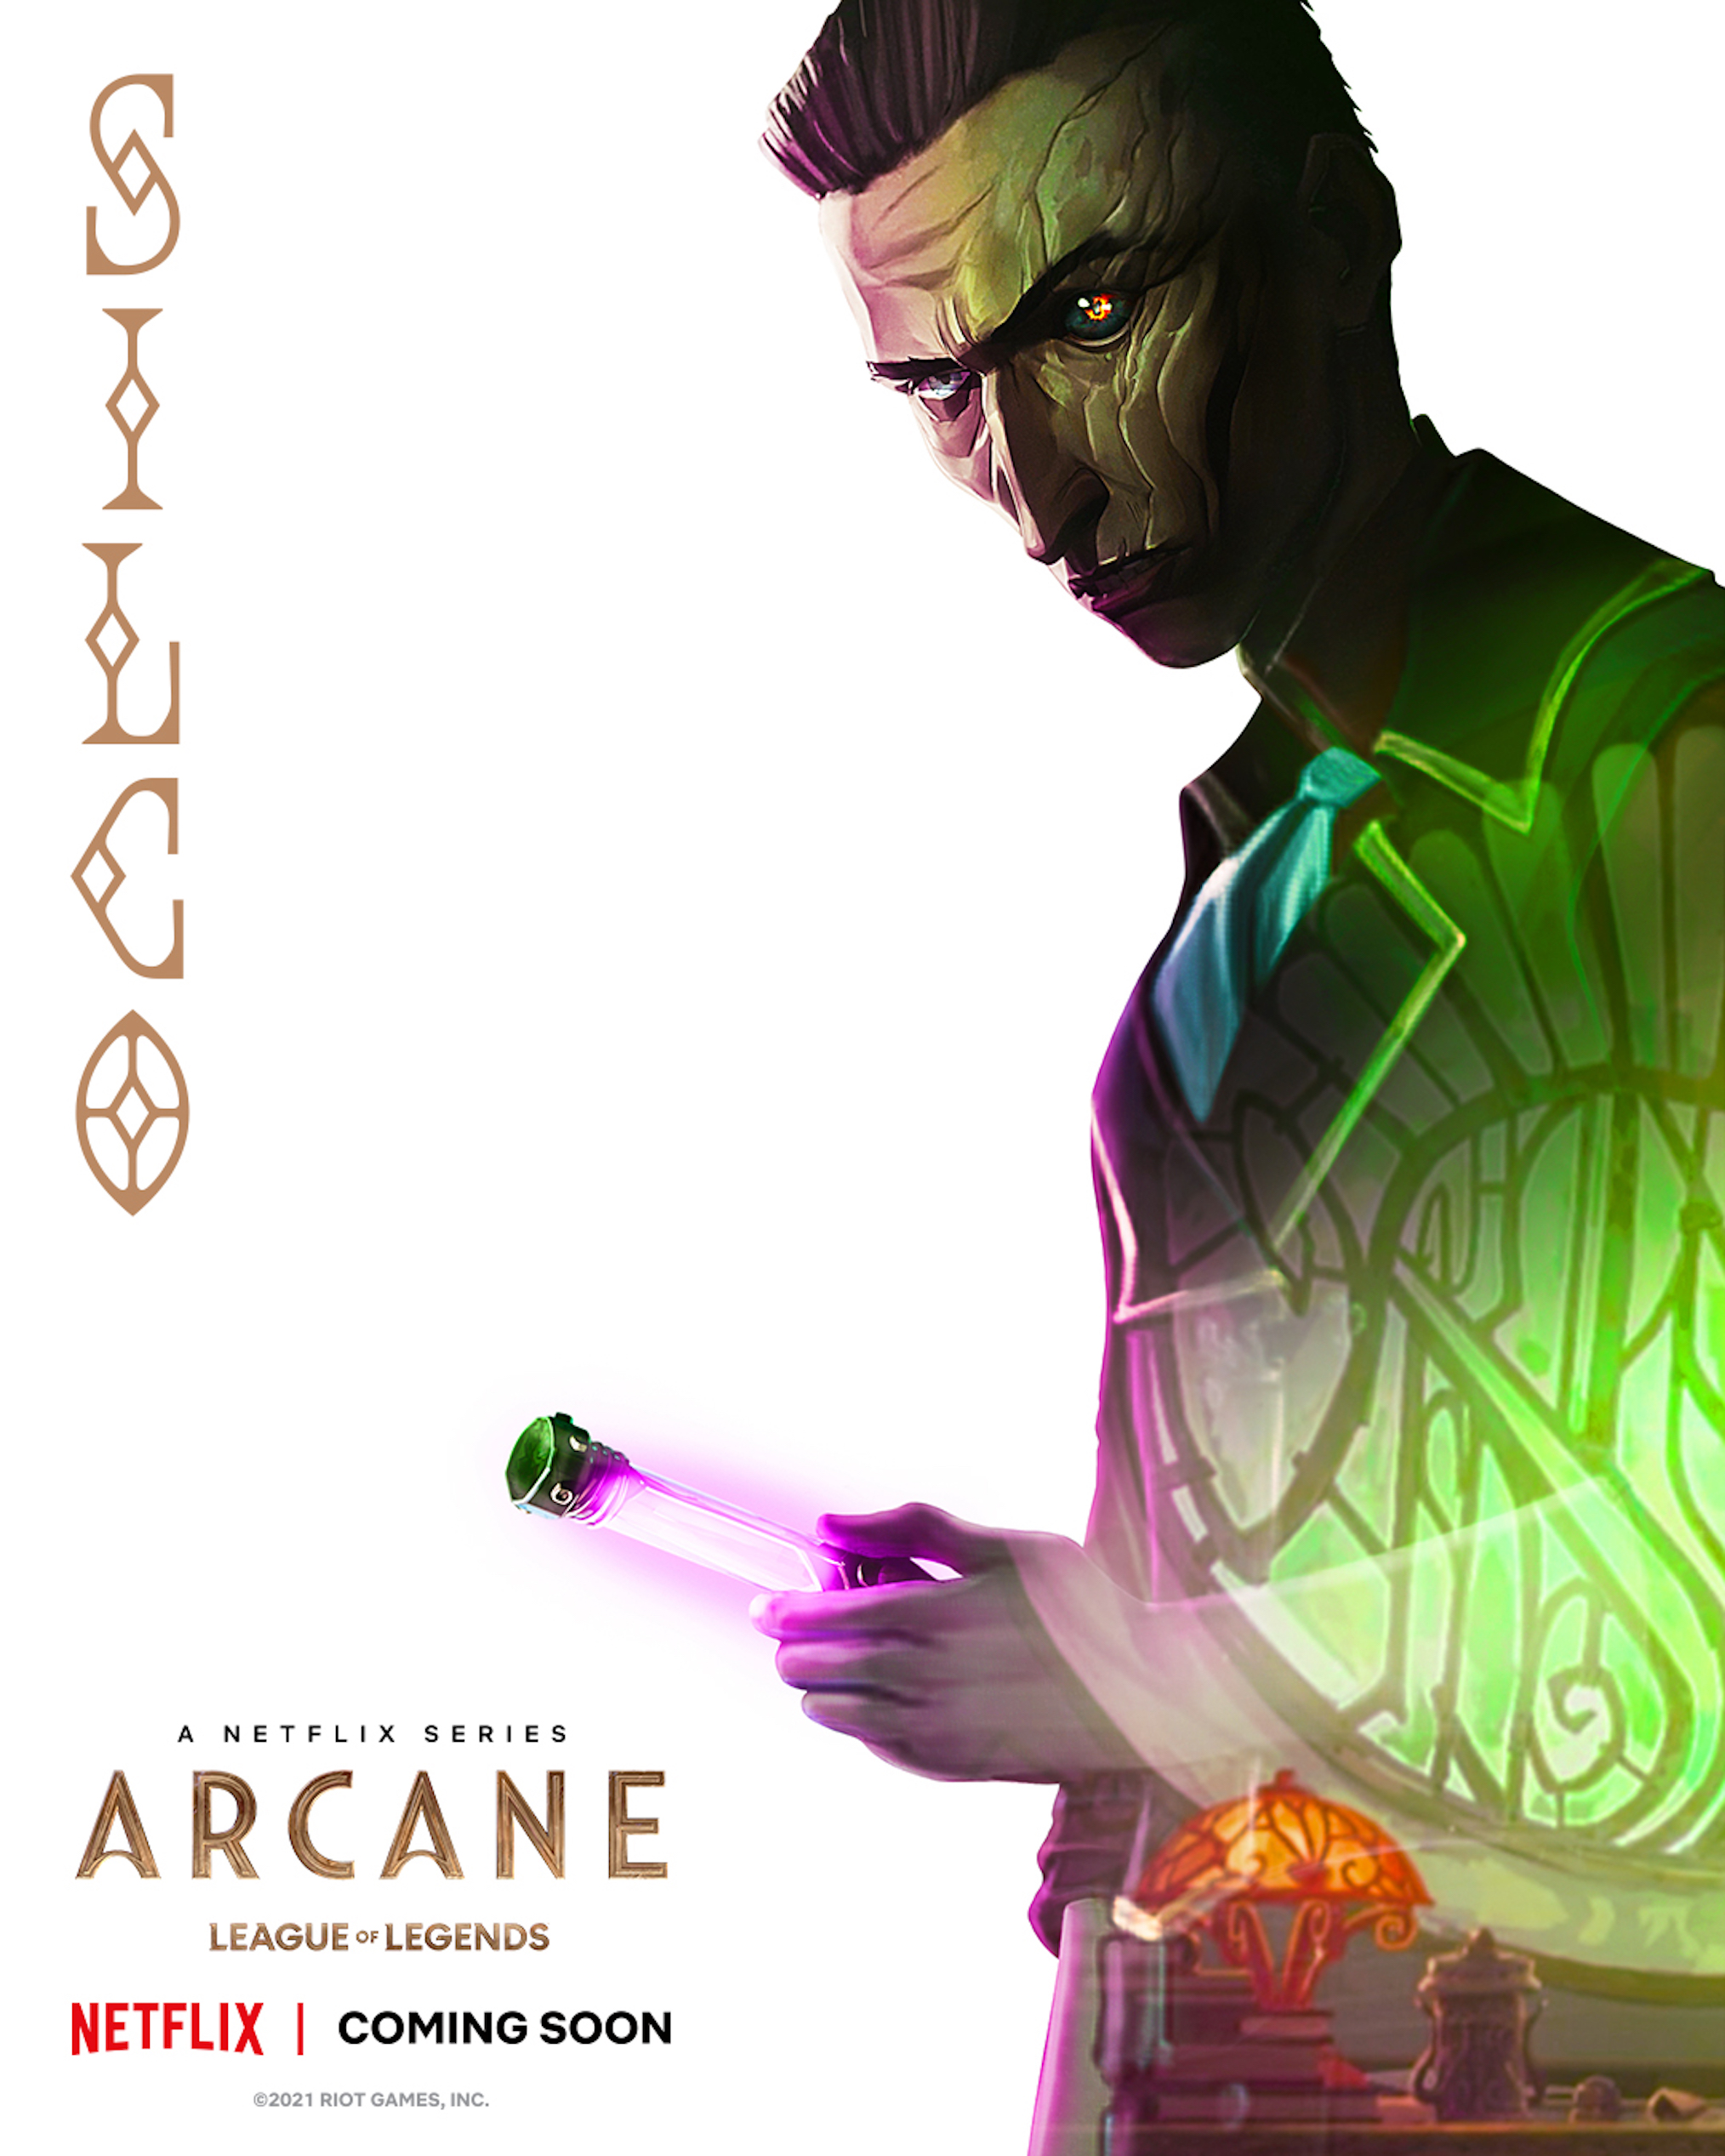 'Arcane,' Netflix & Riot Games 'League of Legends' Animated Series, Jason Spisak as Silco